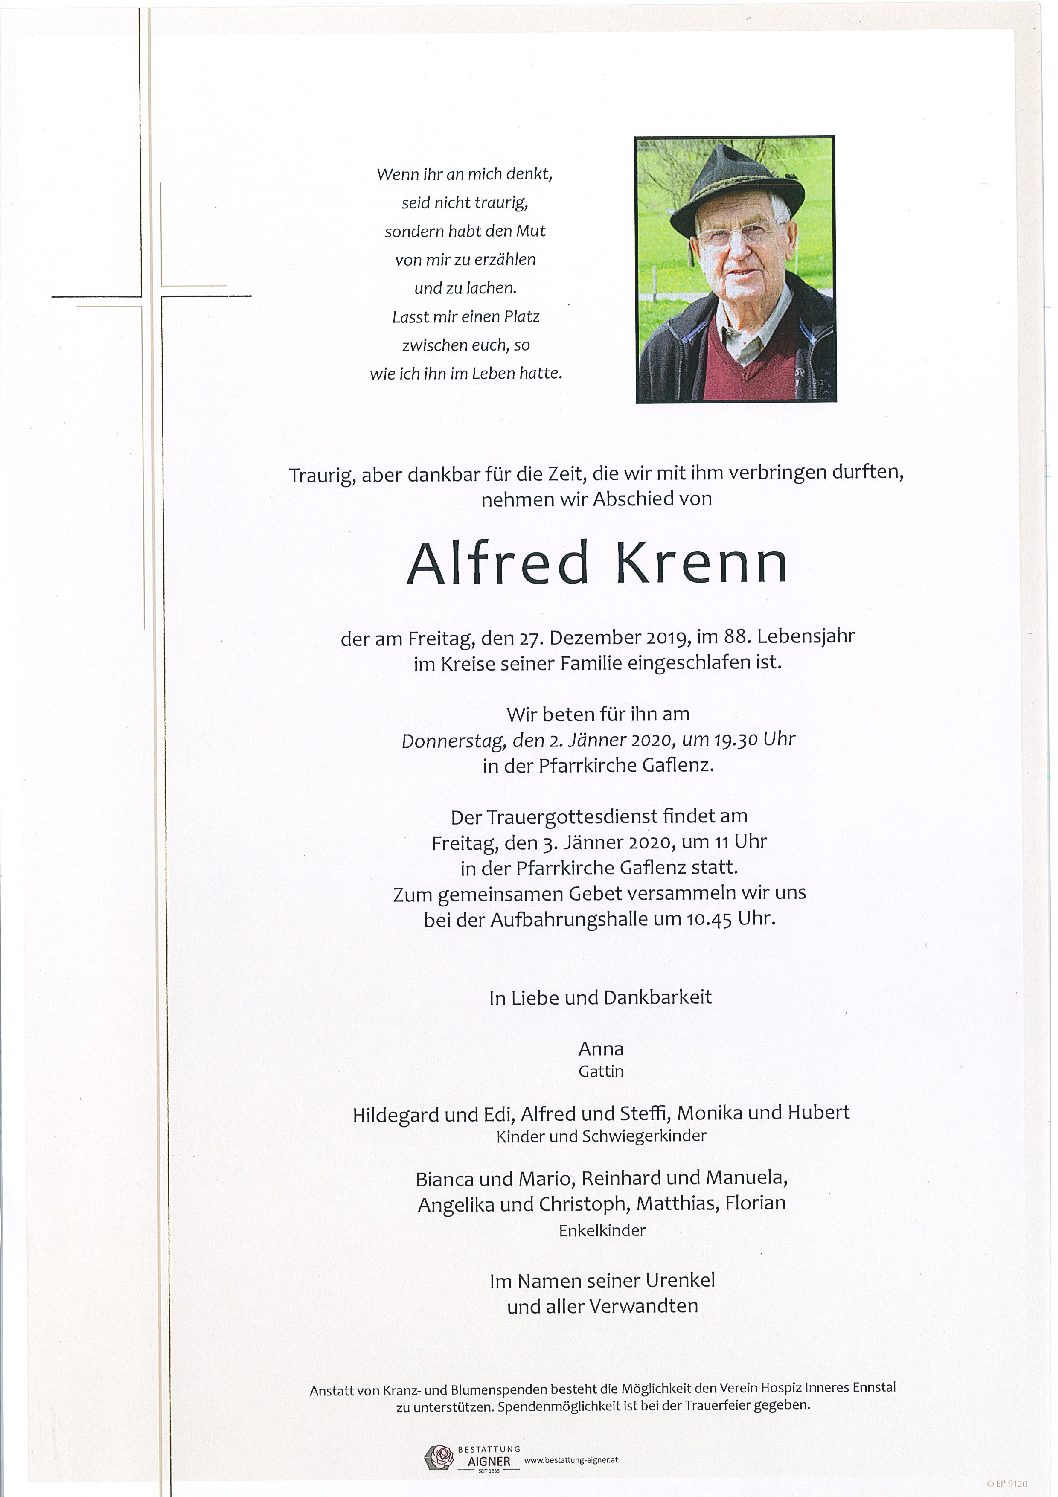 Alfred Krenn